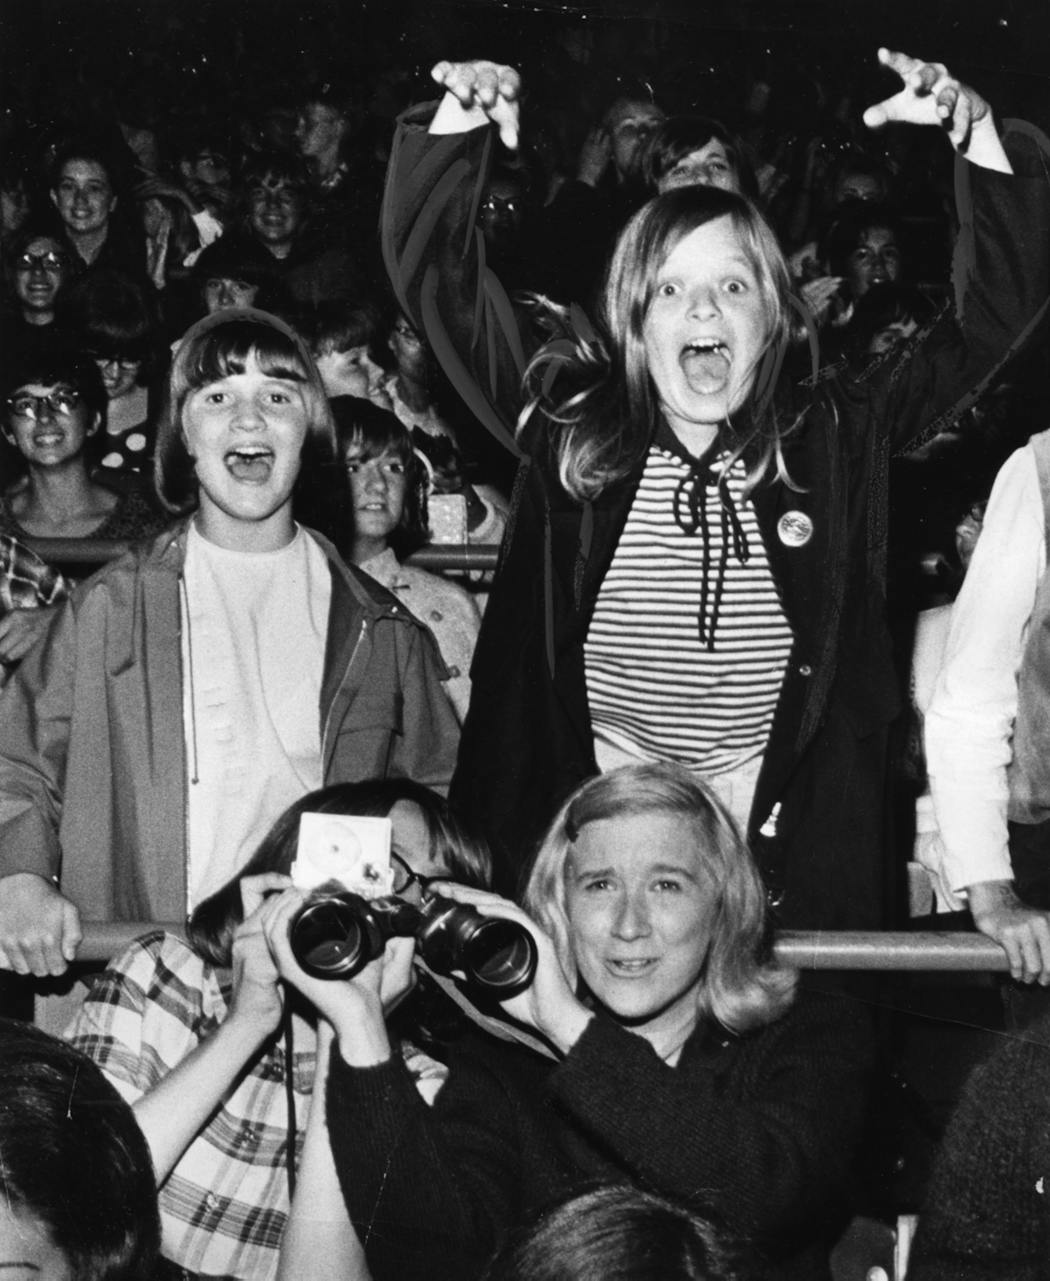 Beatles fans at Metropolitan Stadium in 1965.